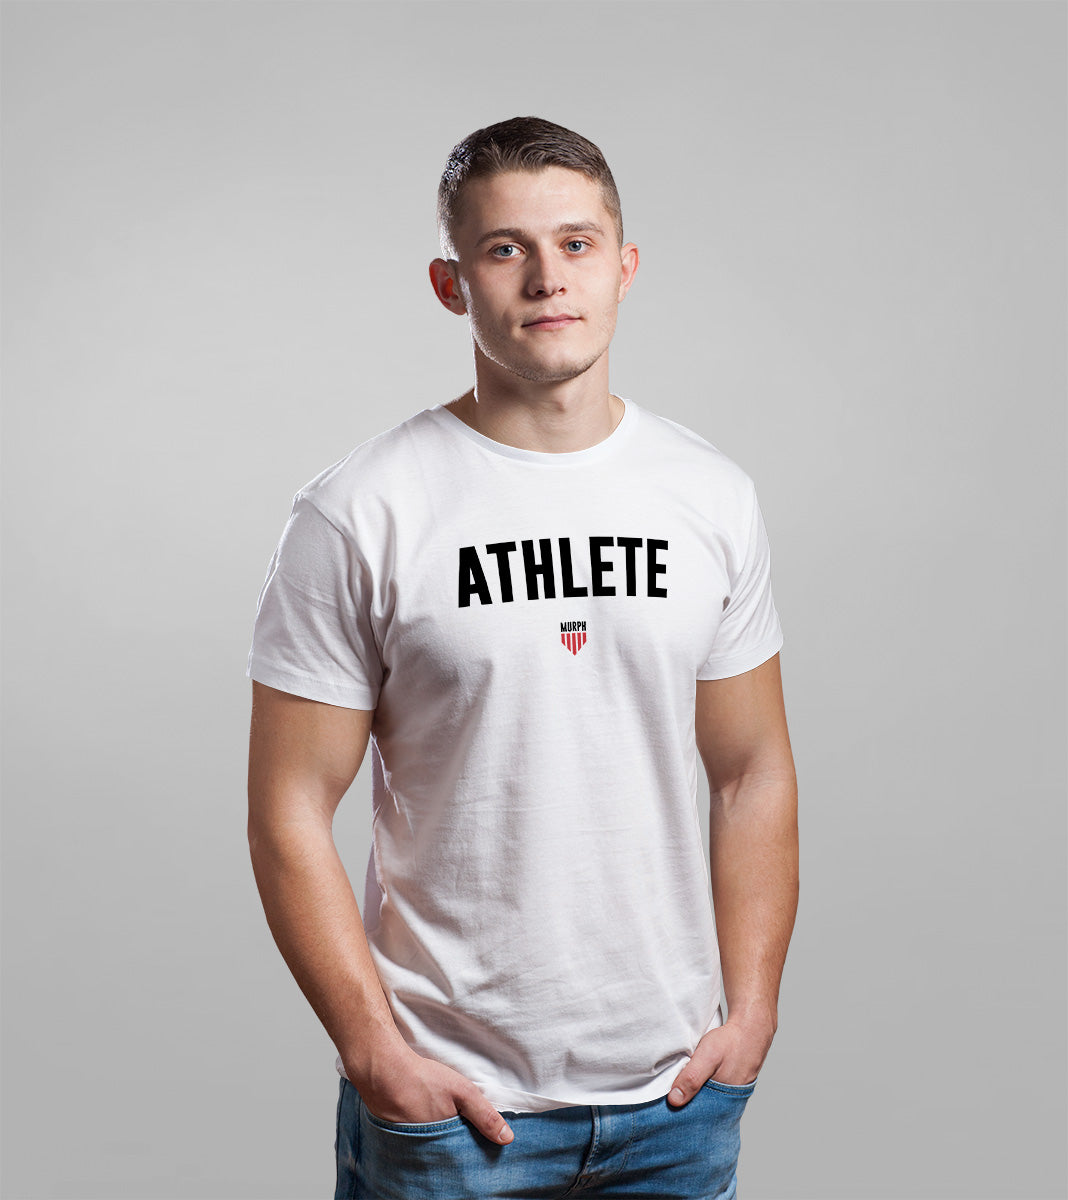 T-shirt Crossfit Homme - Athlete Murph